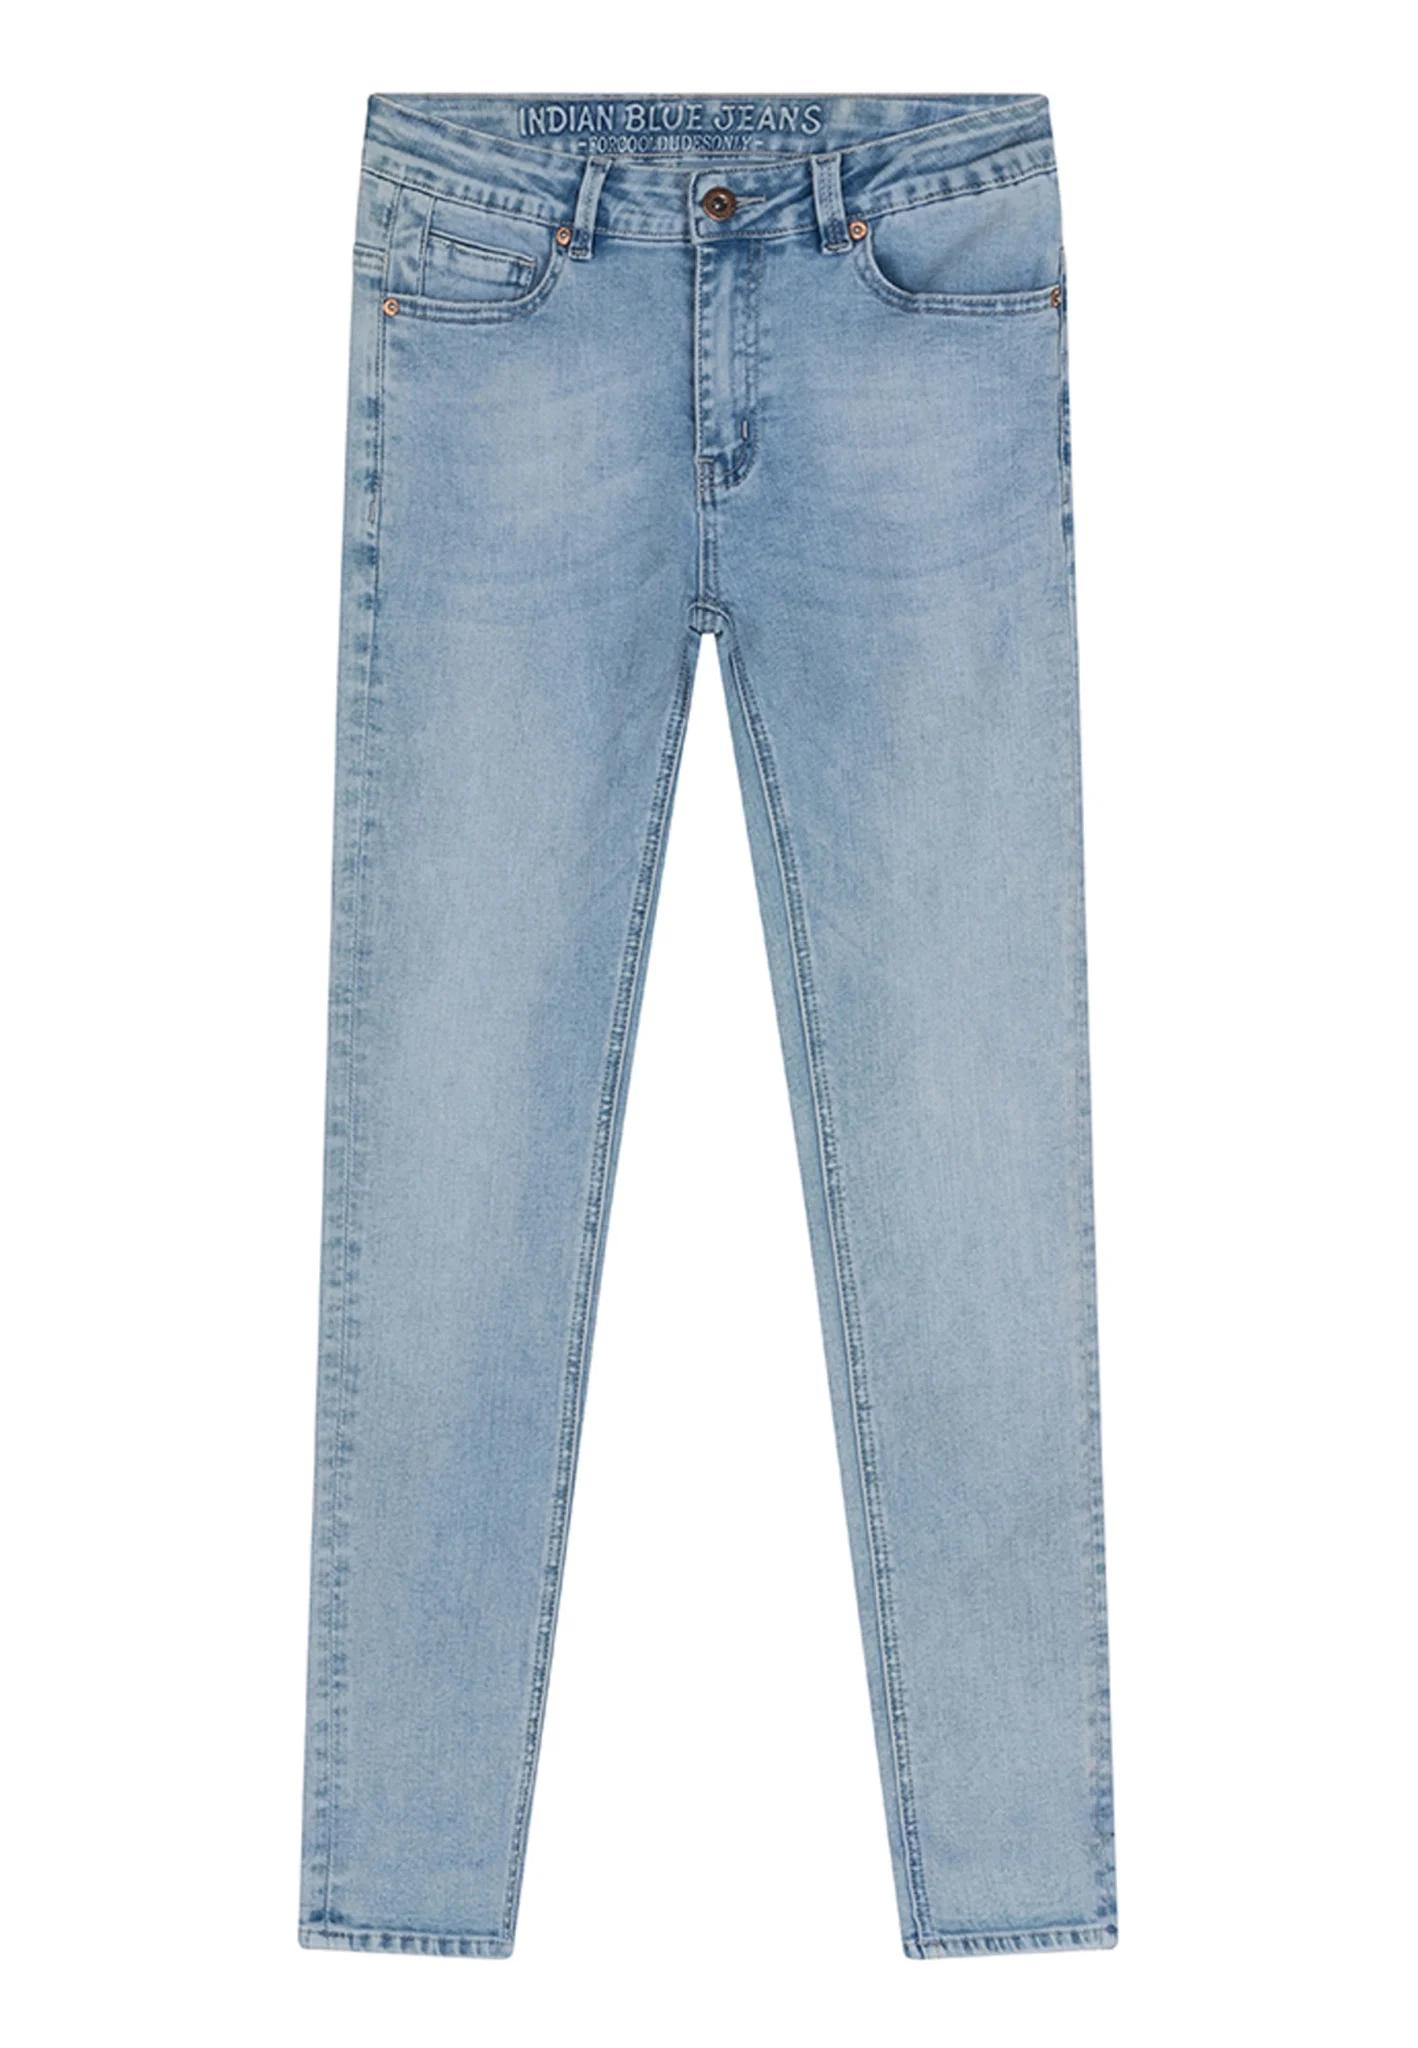 Afbeelding van Indian Blue Jongens jeans jay tapered fit light blue denim